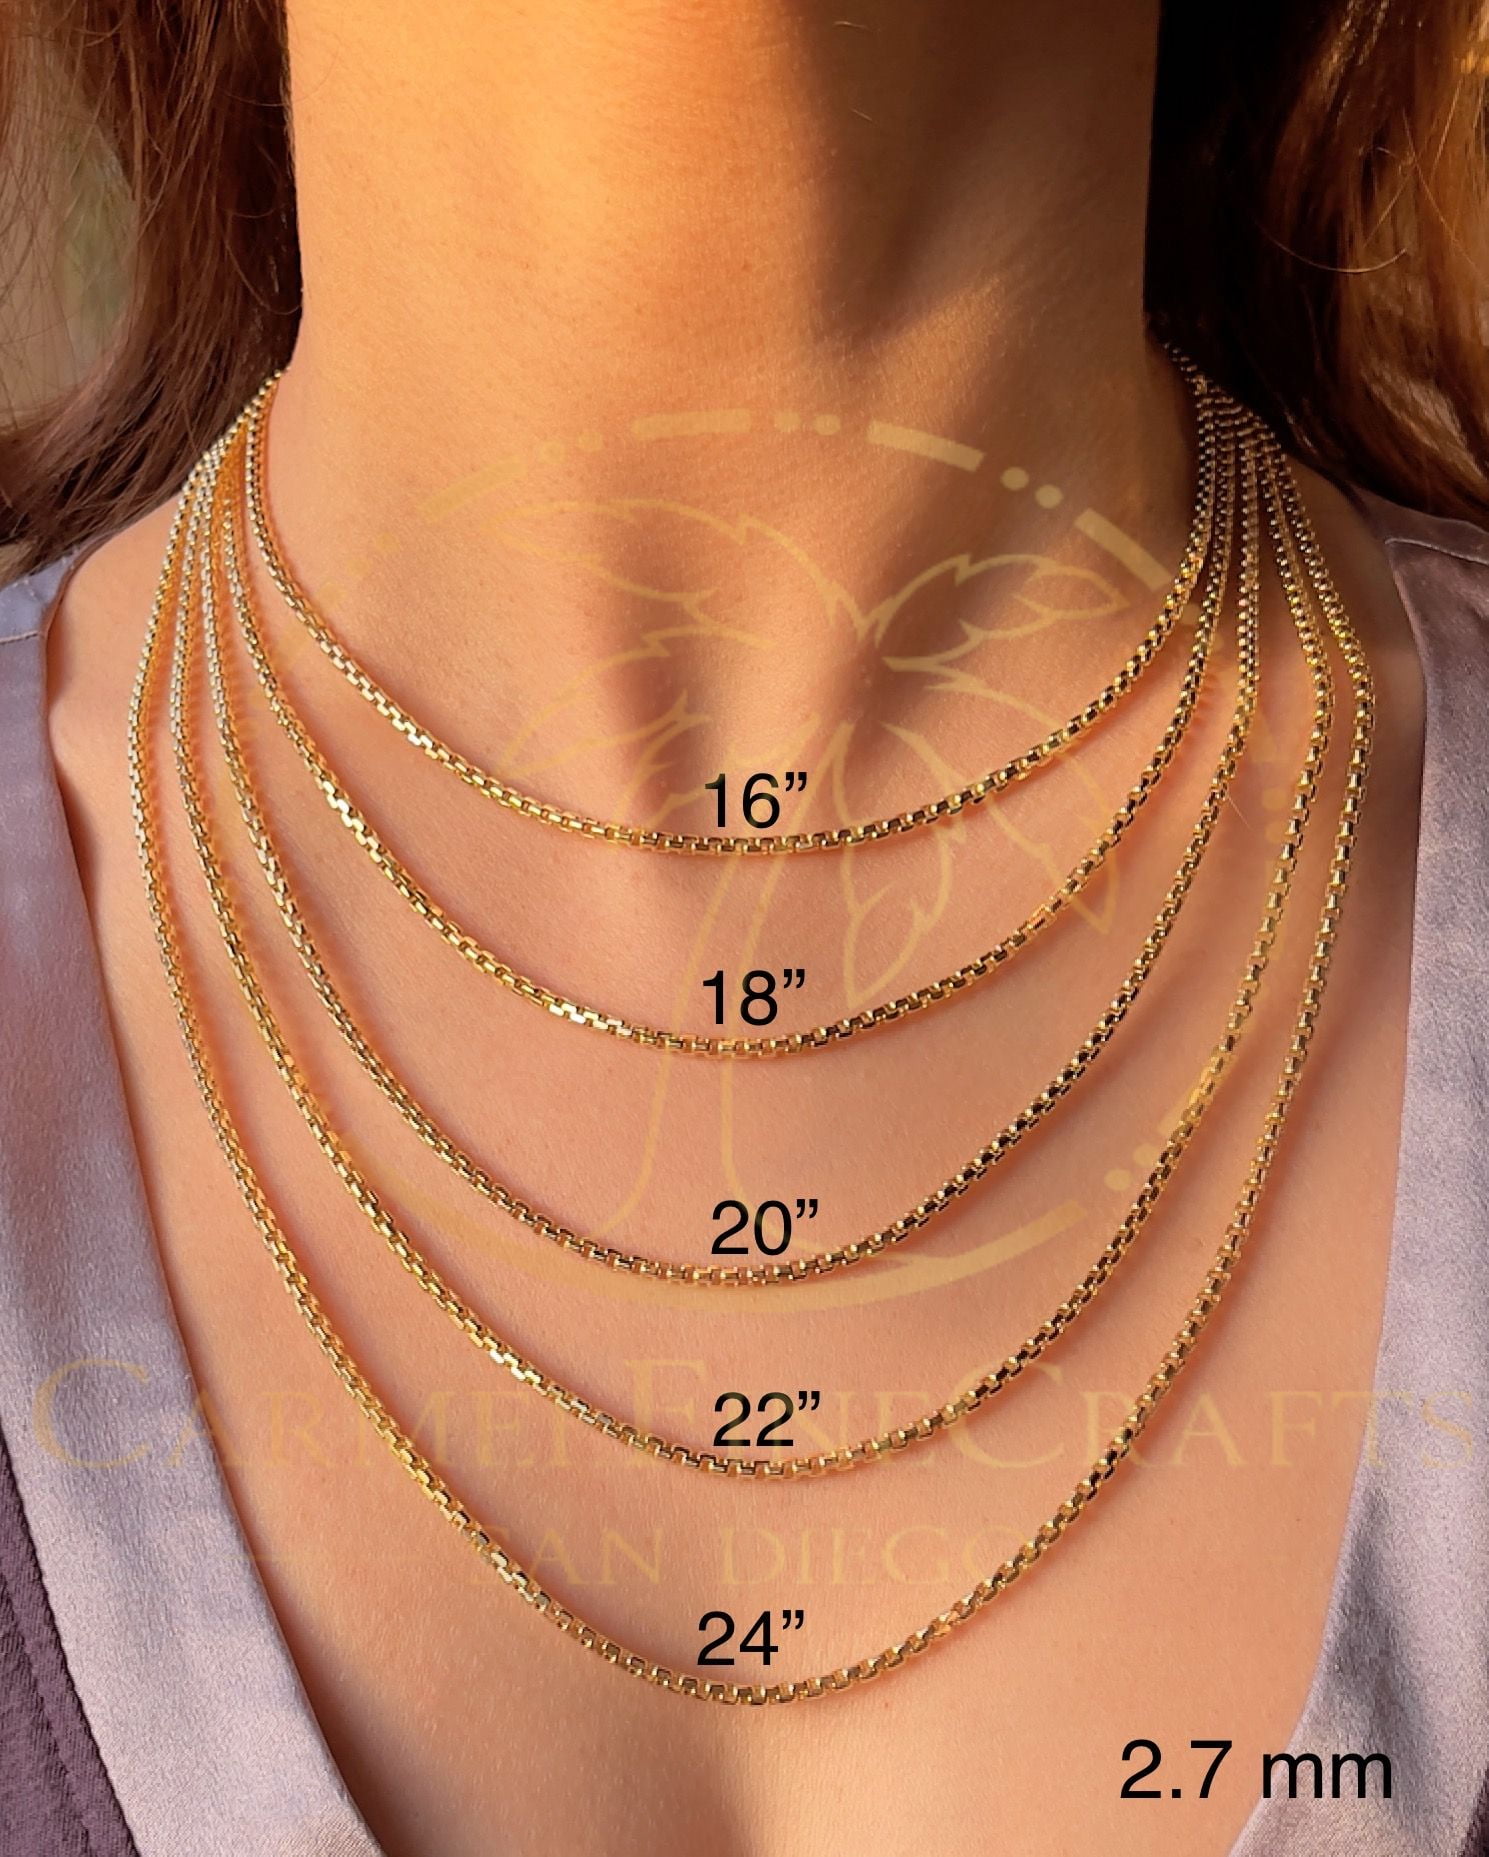 Herringbone Chain Necklace 14K | Adina Eden Jewels